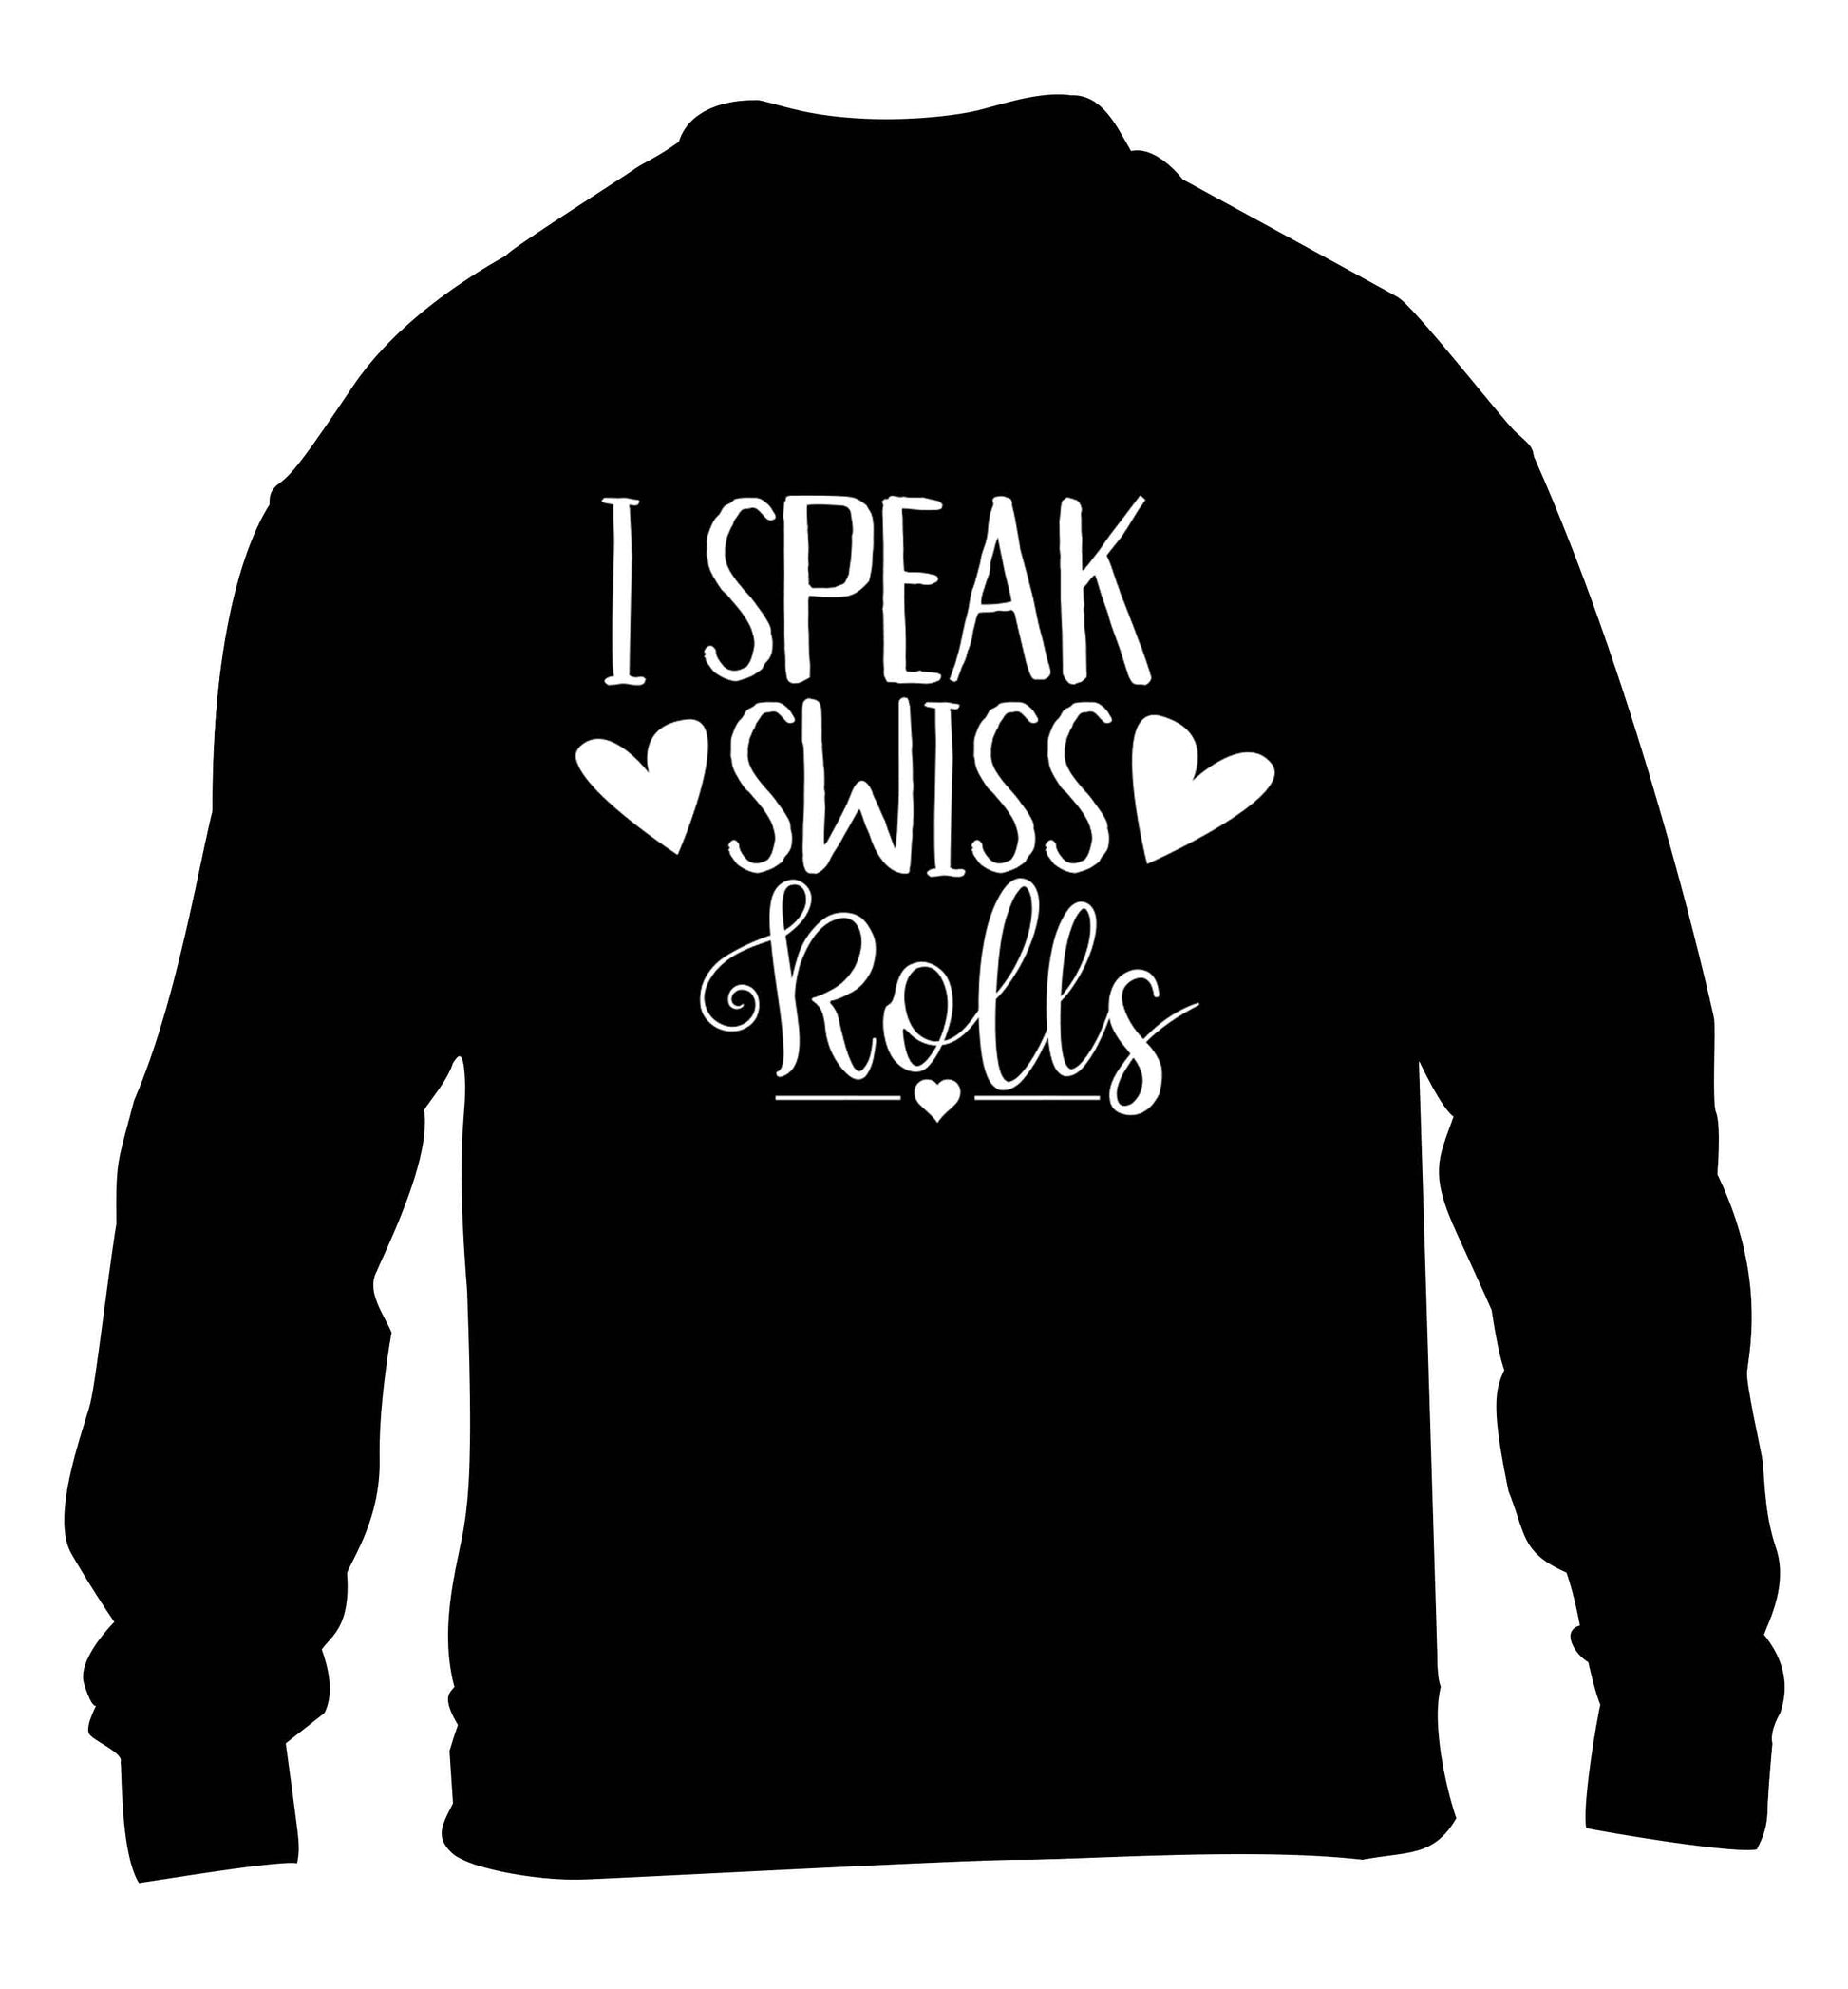 I speak swiss..rolls children's black sweater 12-13 Years